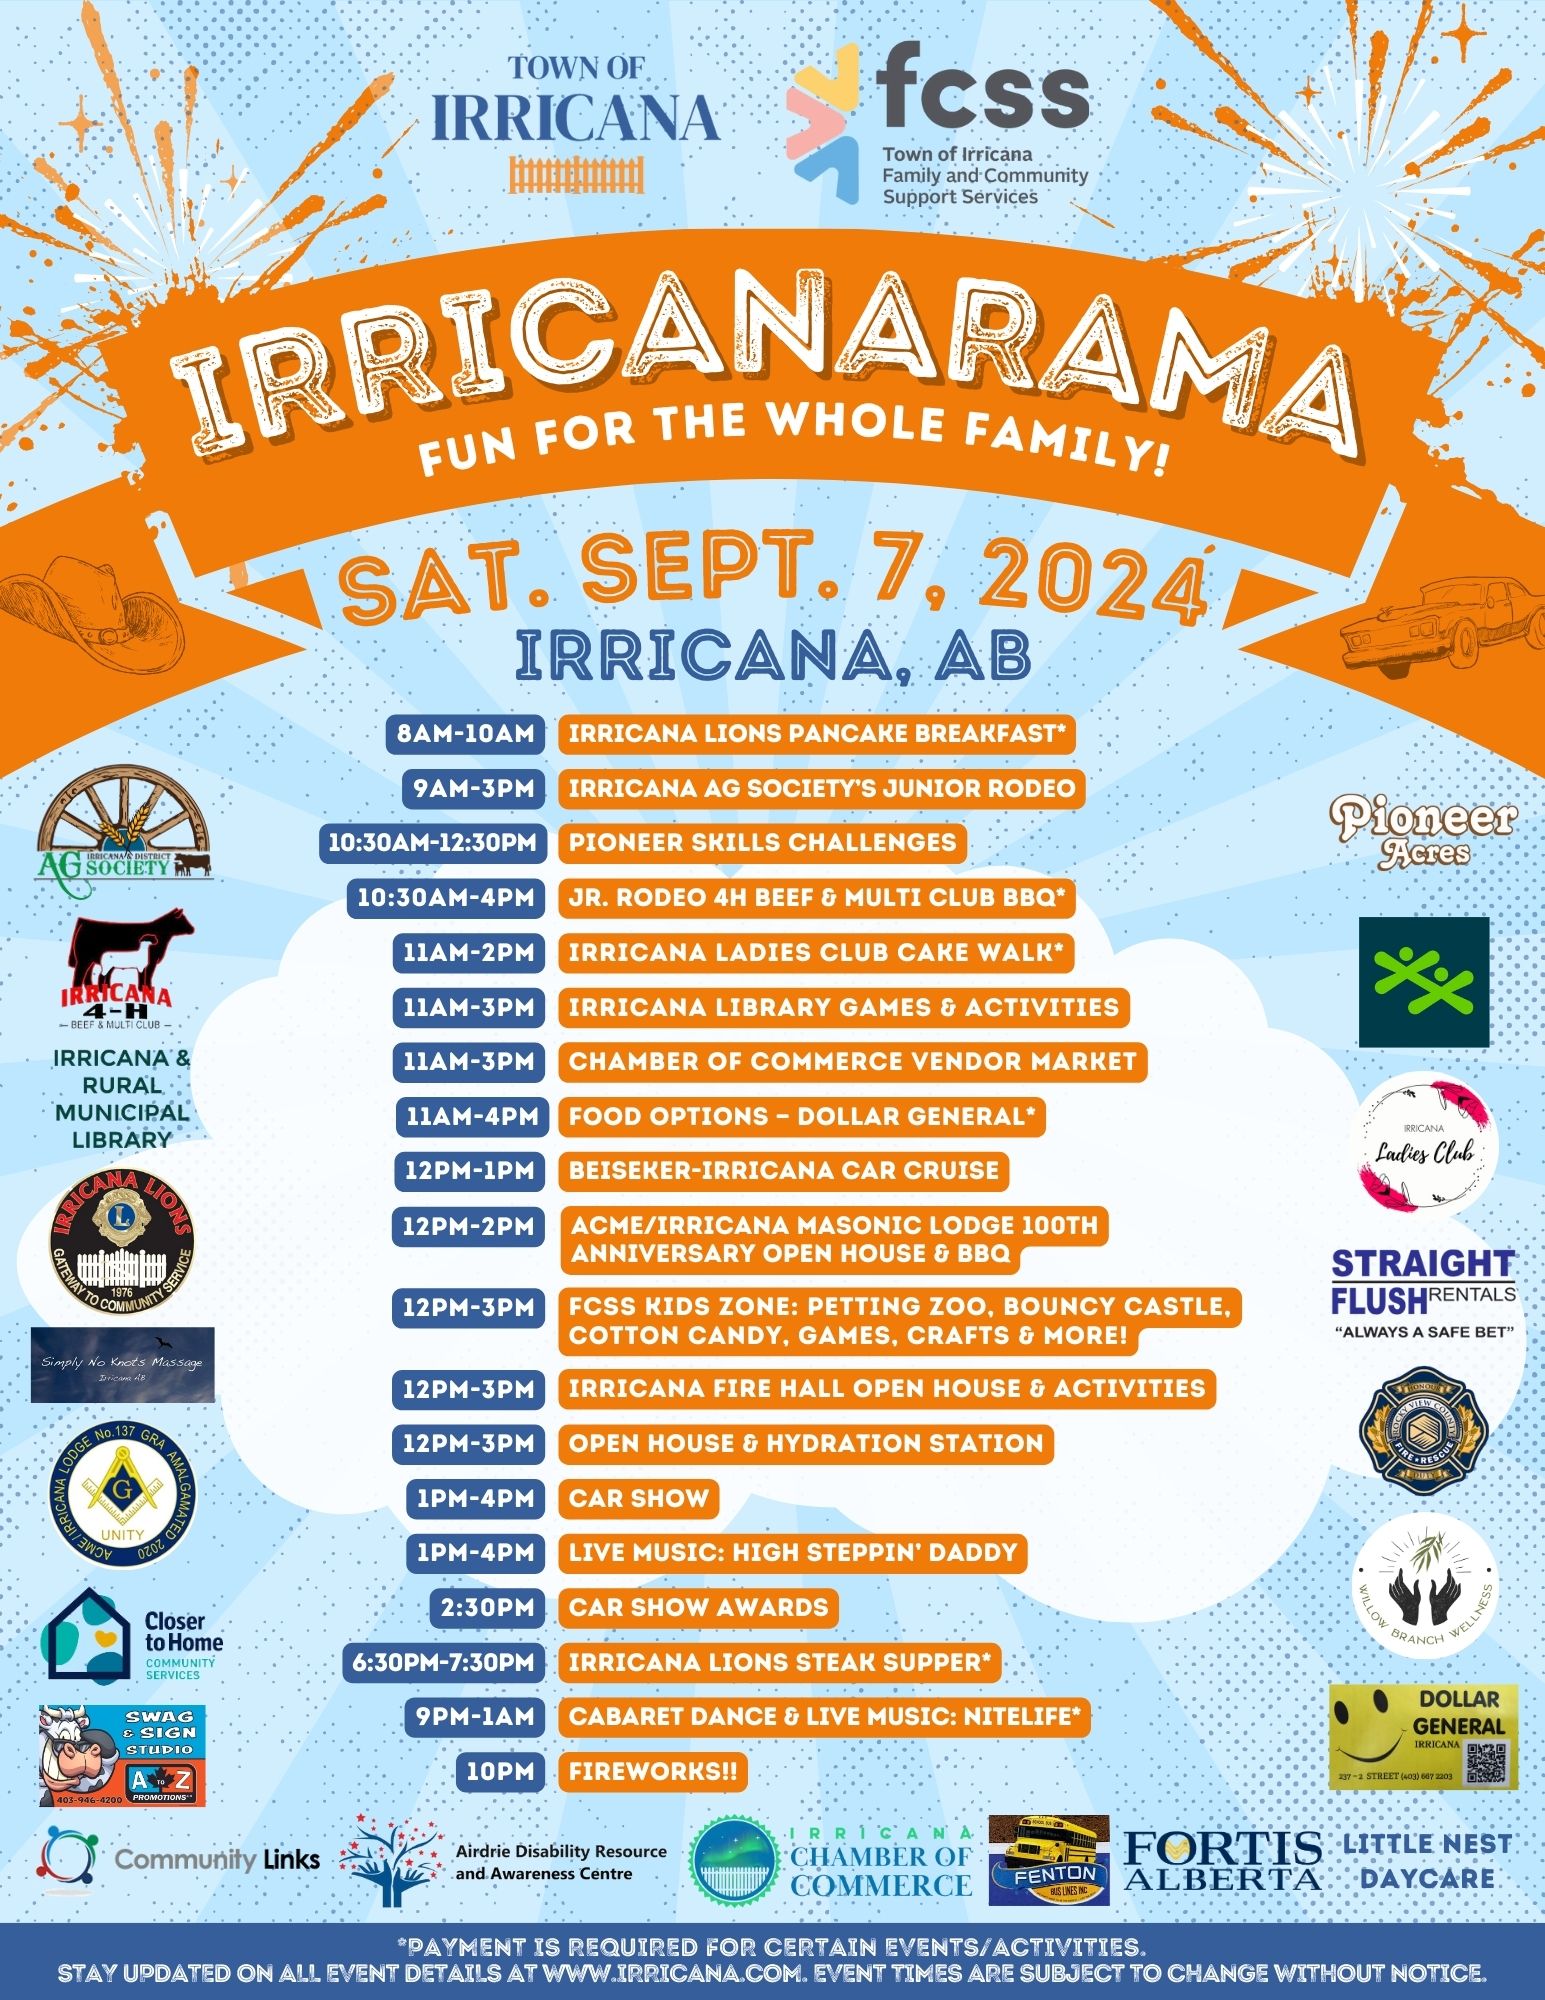 Irricanarama 2024 Timeline of Events in Irricana, Alberta on September 7, 2024